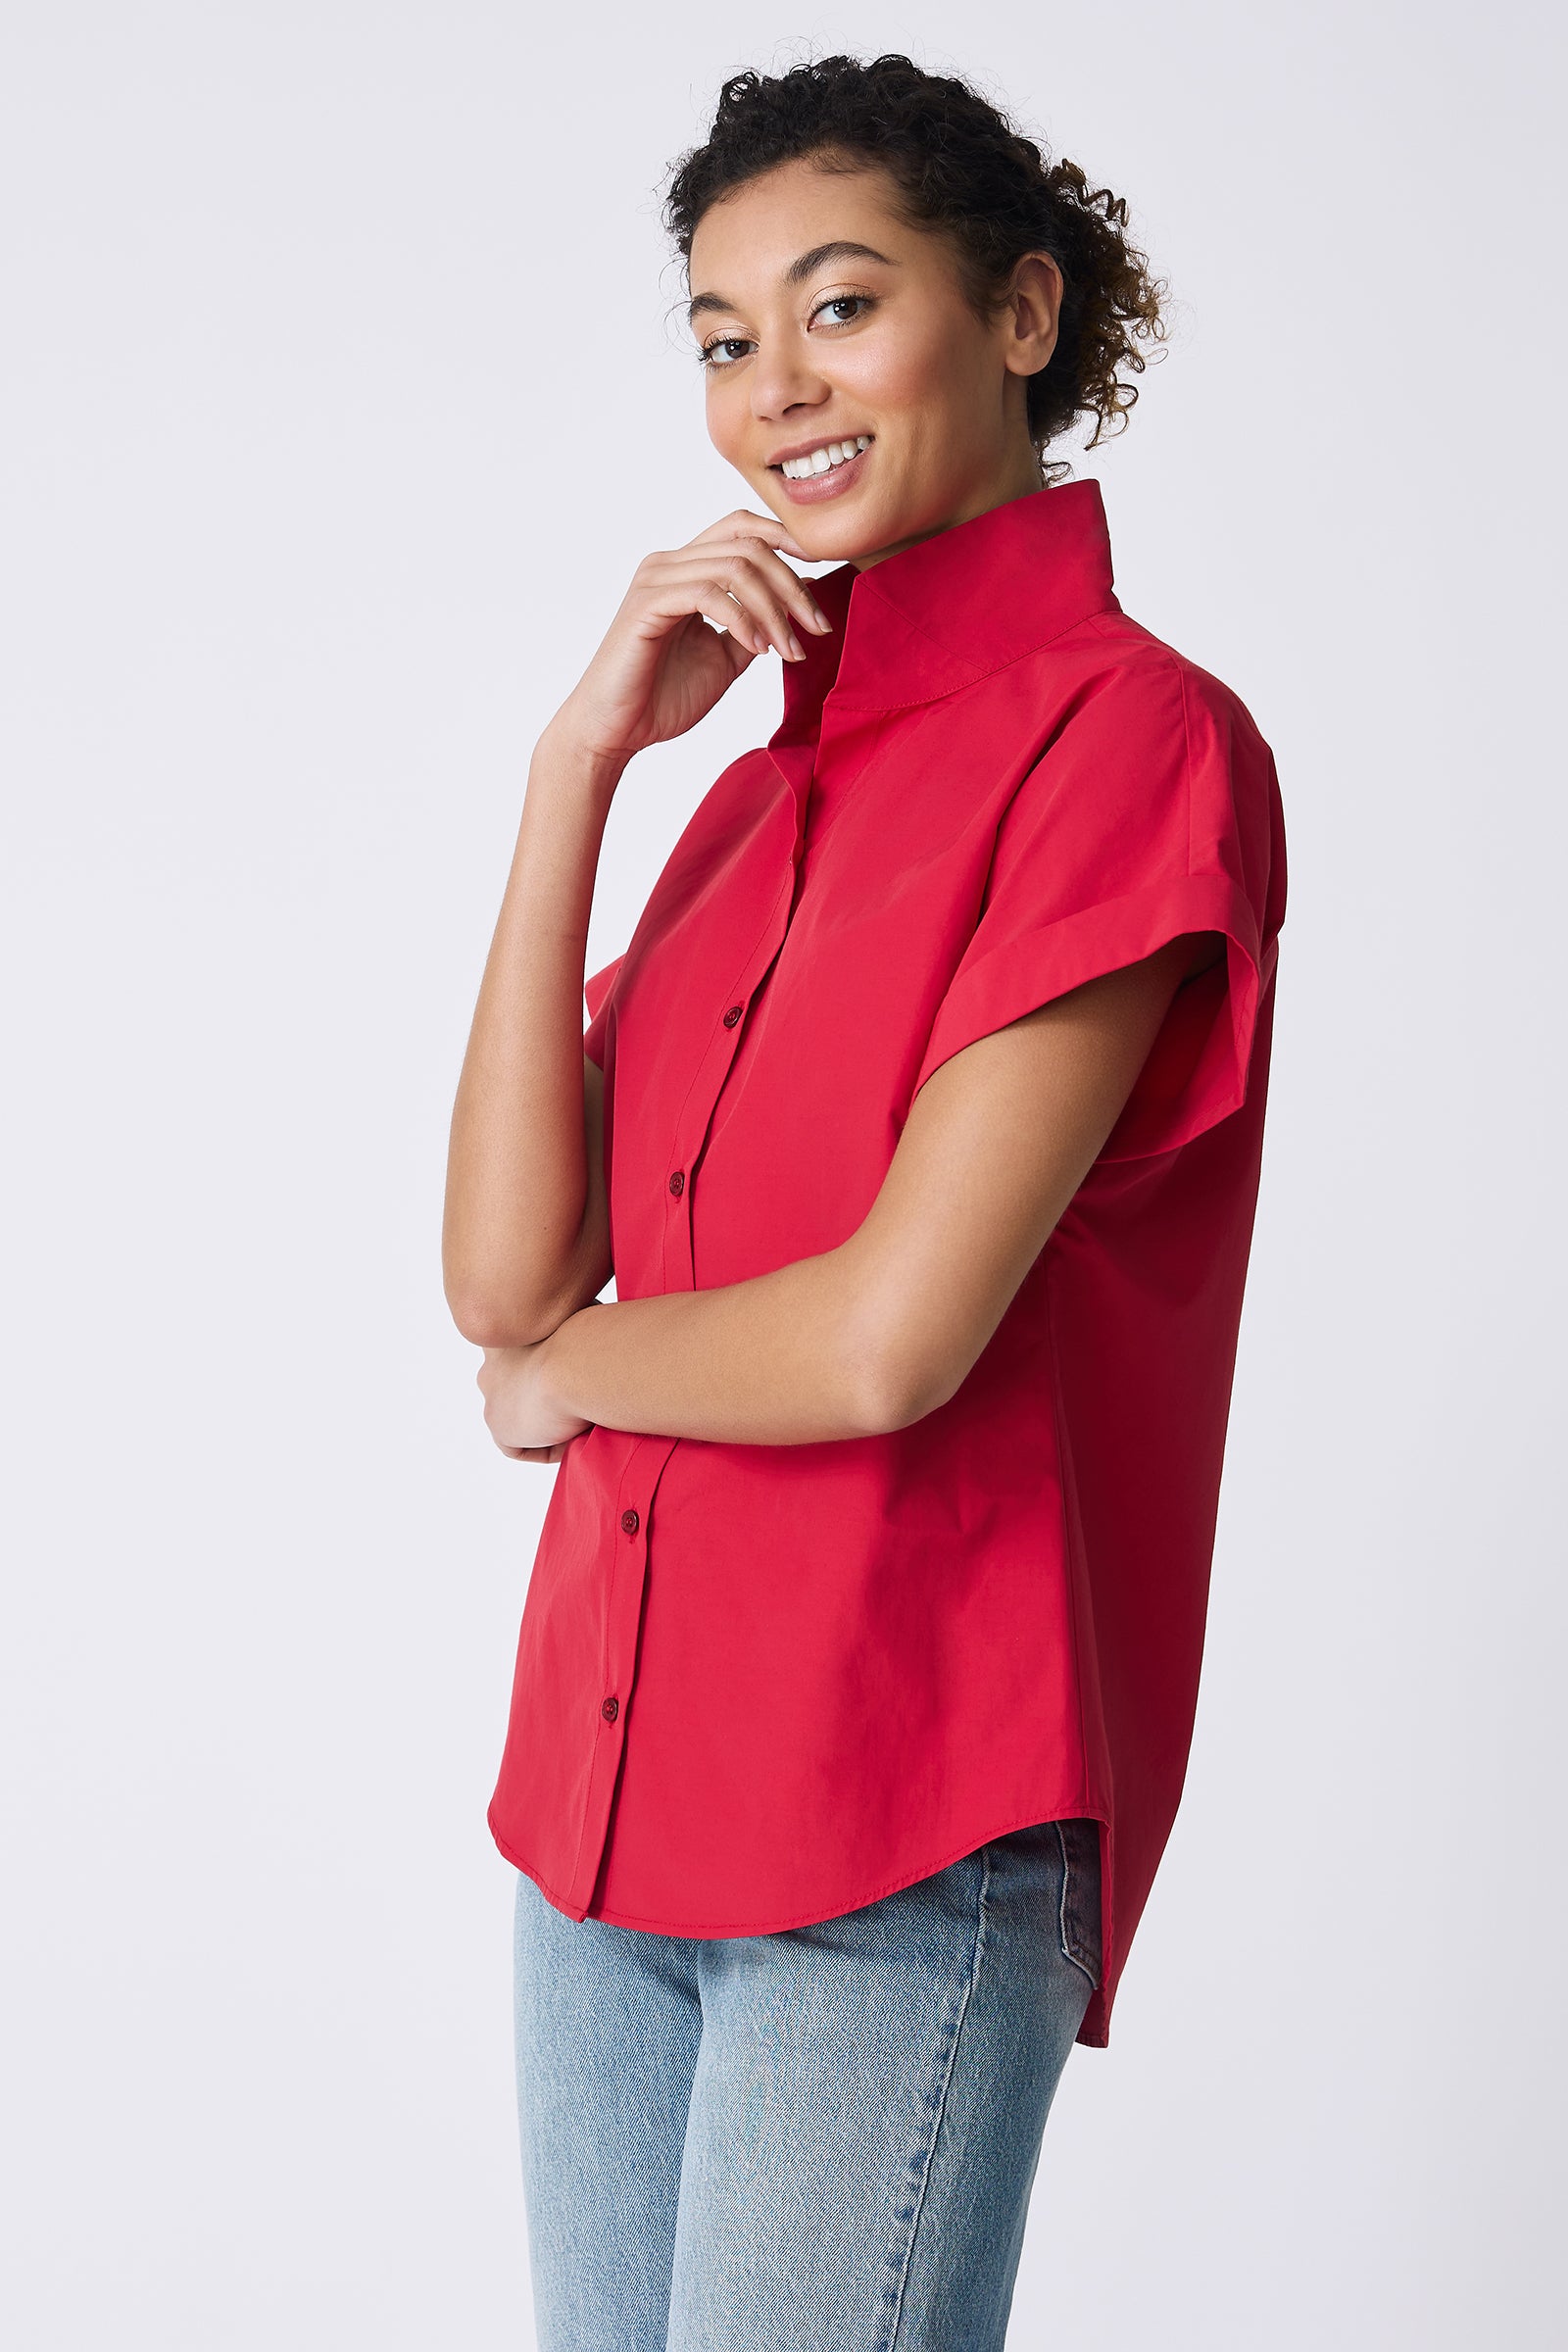 Kal Rieman Ali Kimono Top in Red on model side view